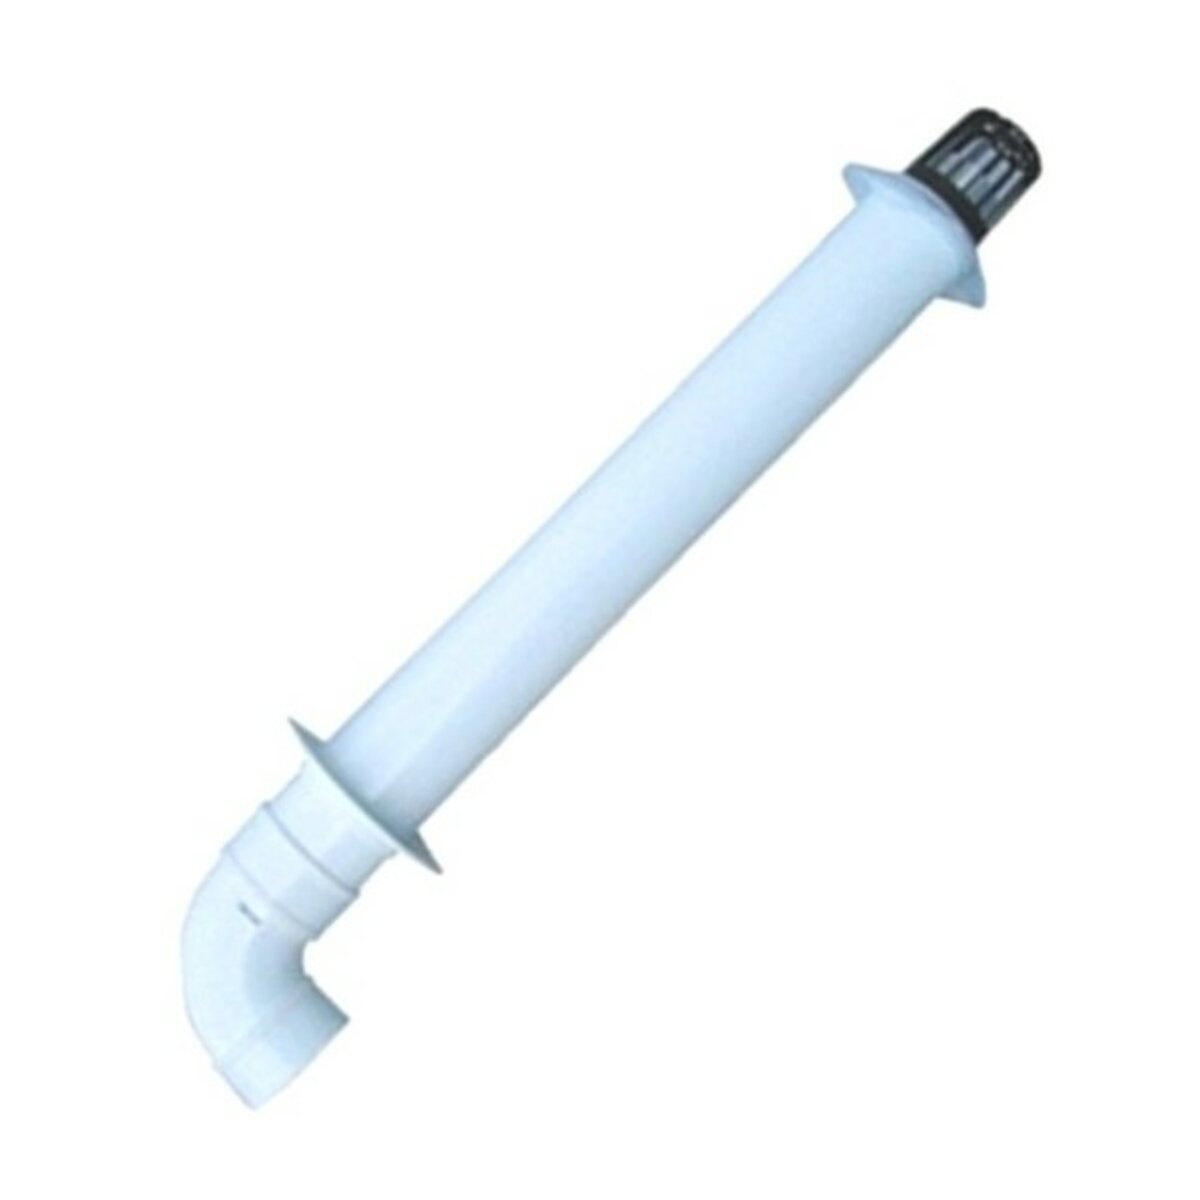 Horizontal coaxial flue kit diam. 60/100 Beretta for sealed chamber water heater